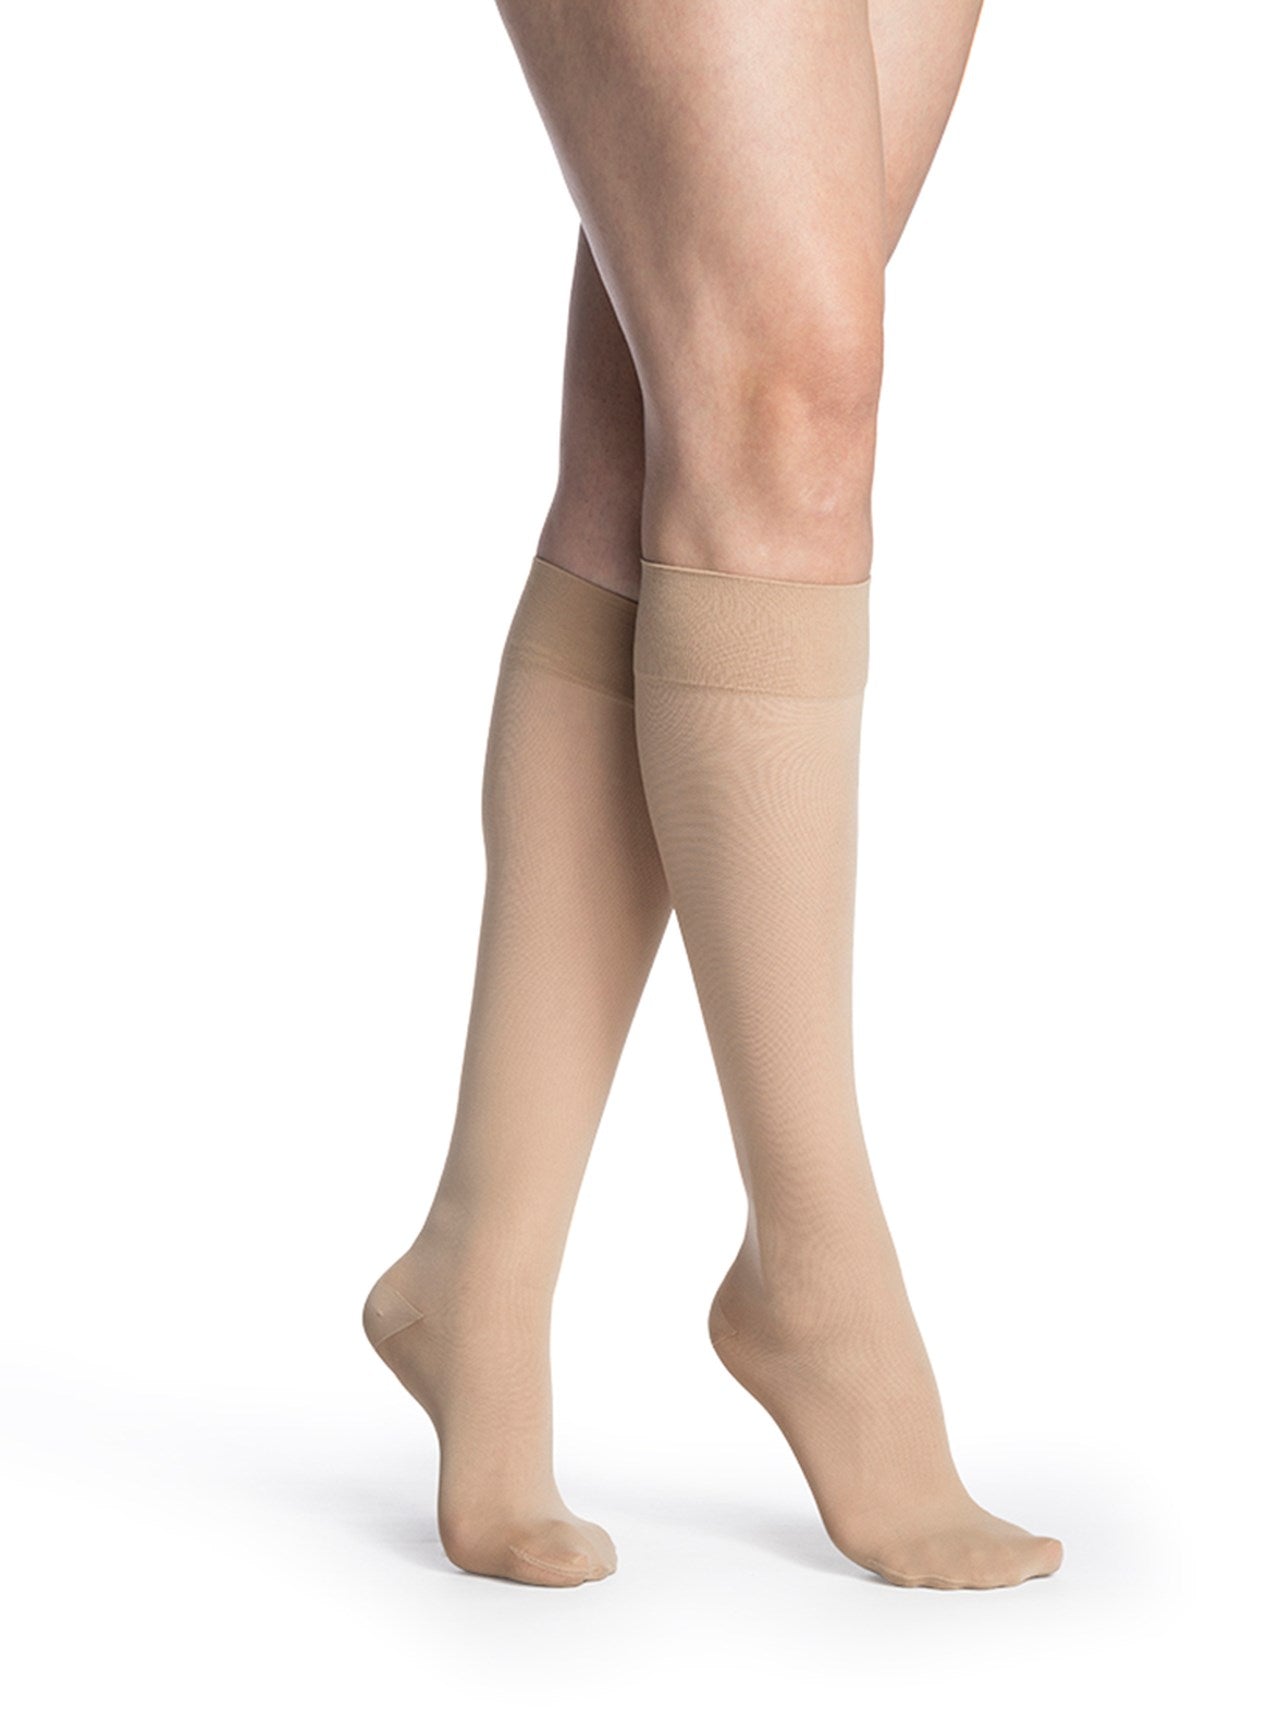 Sigvaris 750 Medium Sheer Compression Socks 20-30 mmHg Calf High for Women Closed Toe